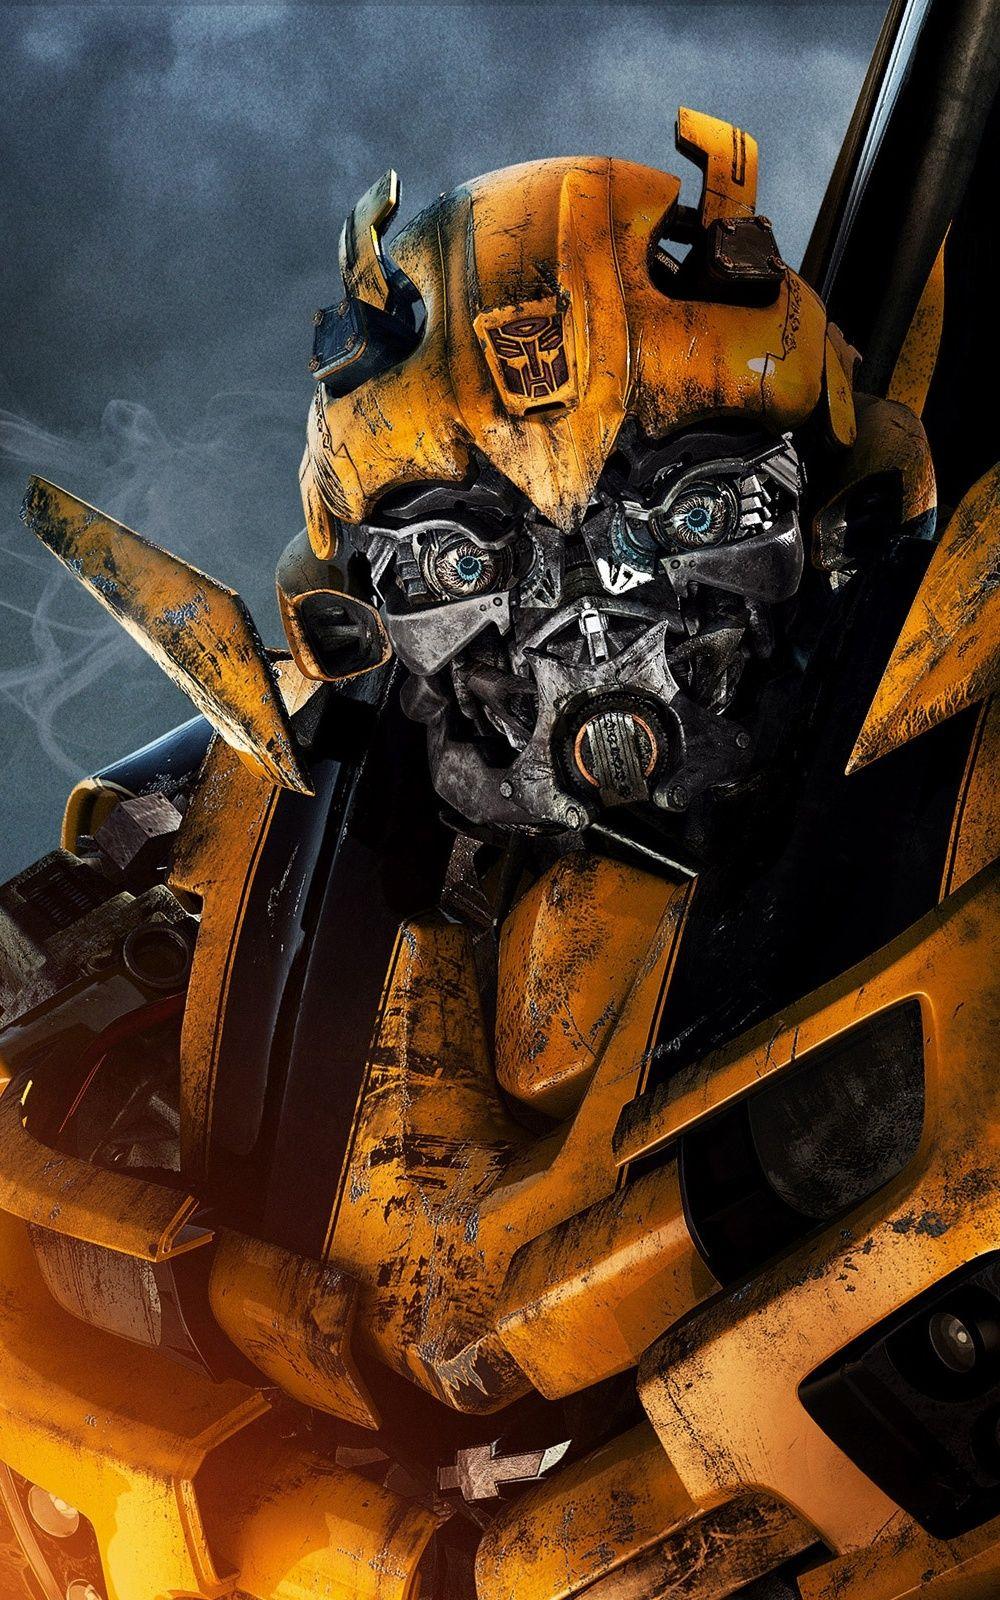 Bumblebee Transformers Lockscreen Android Wallpaper free download